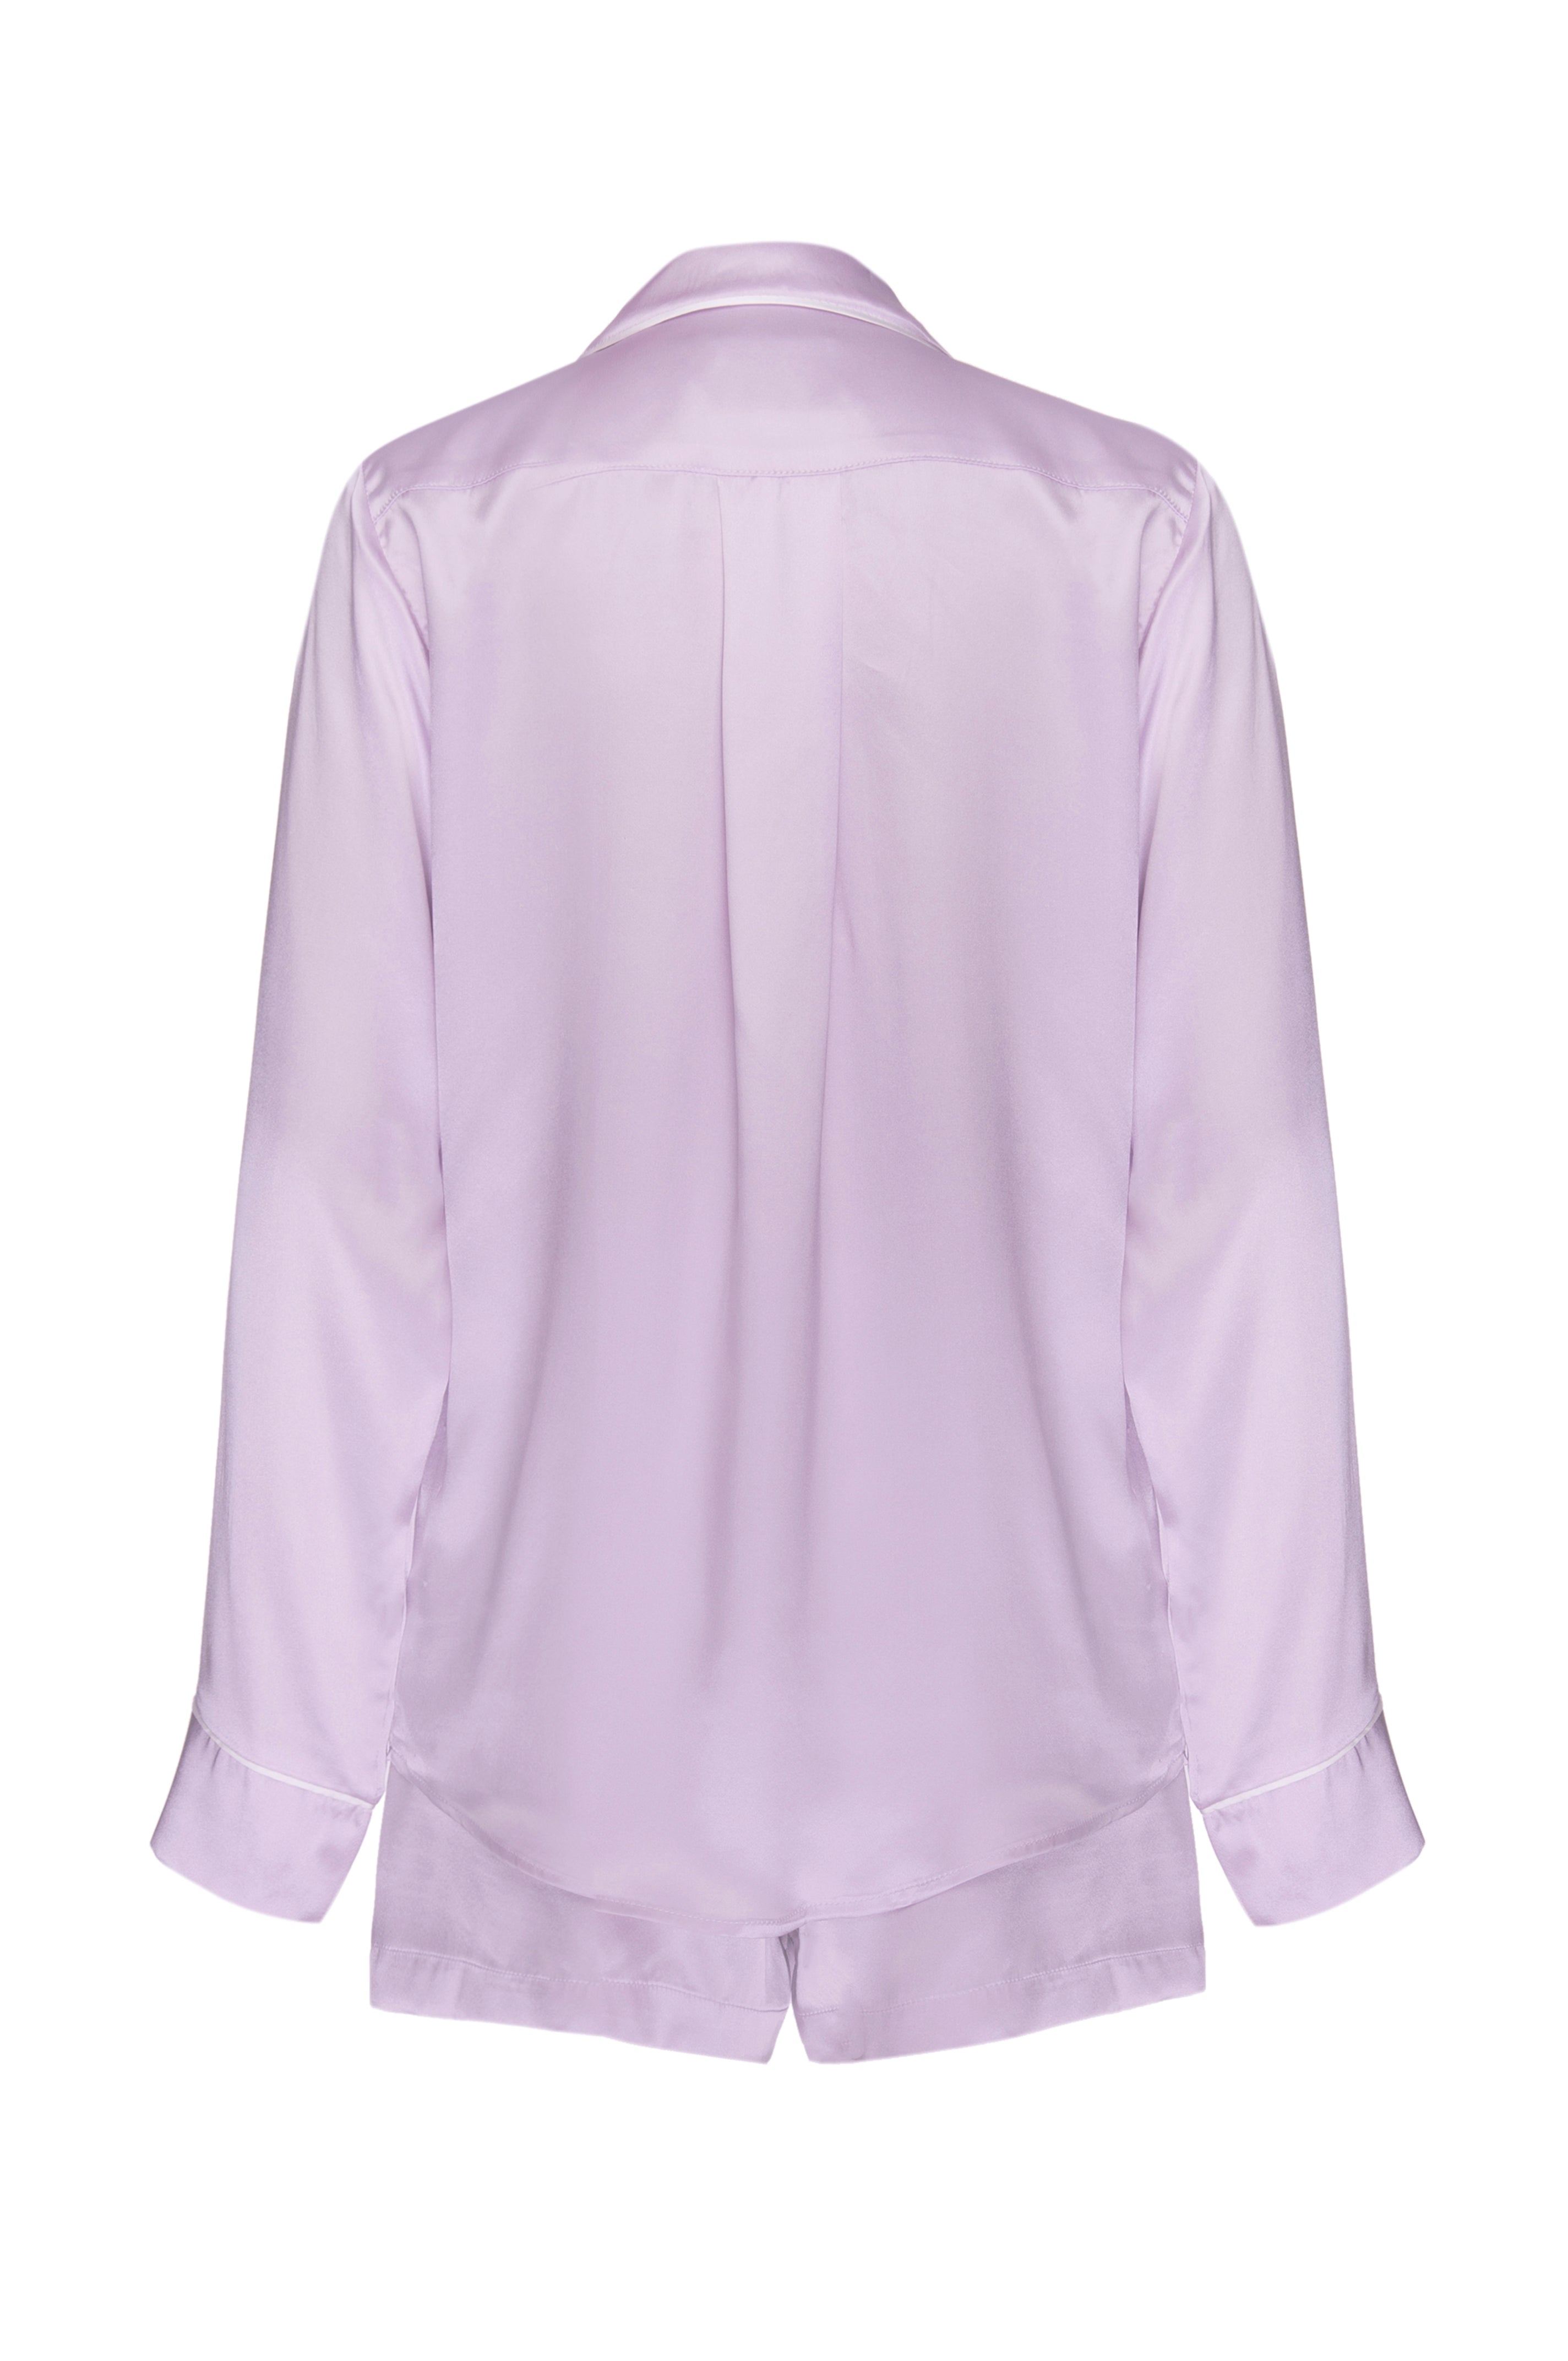 Silk Charmeuse Long Sleeved PJ Top: Lilac